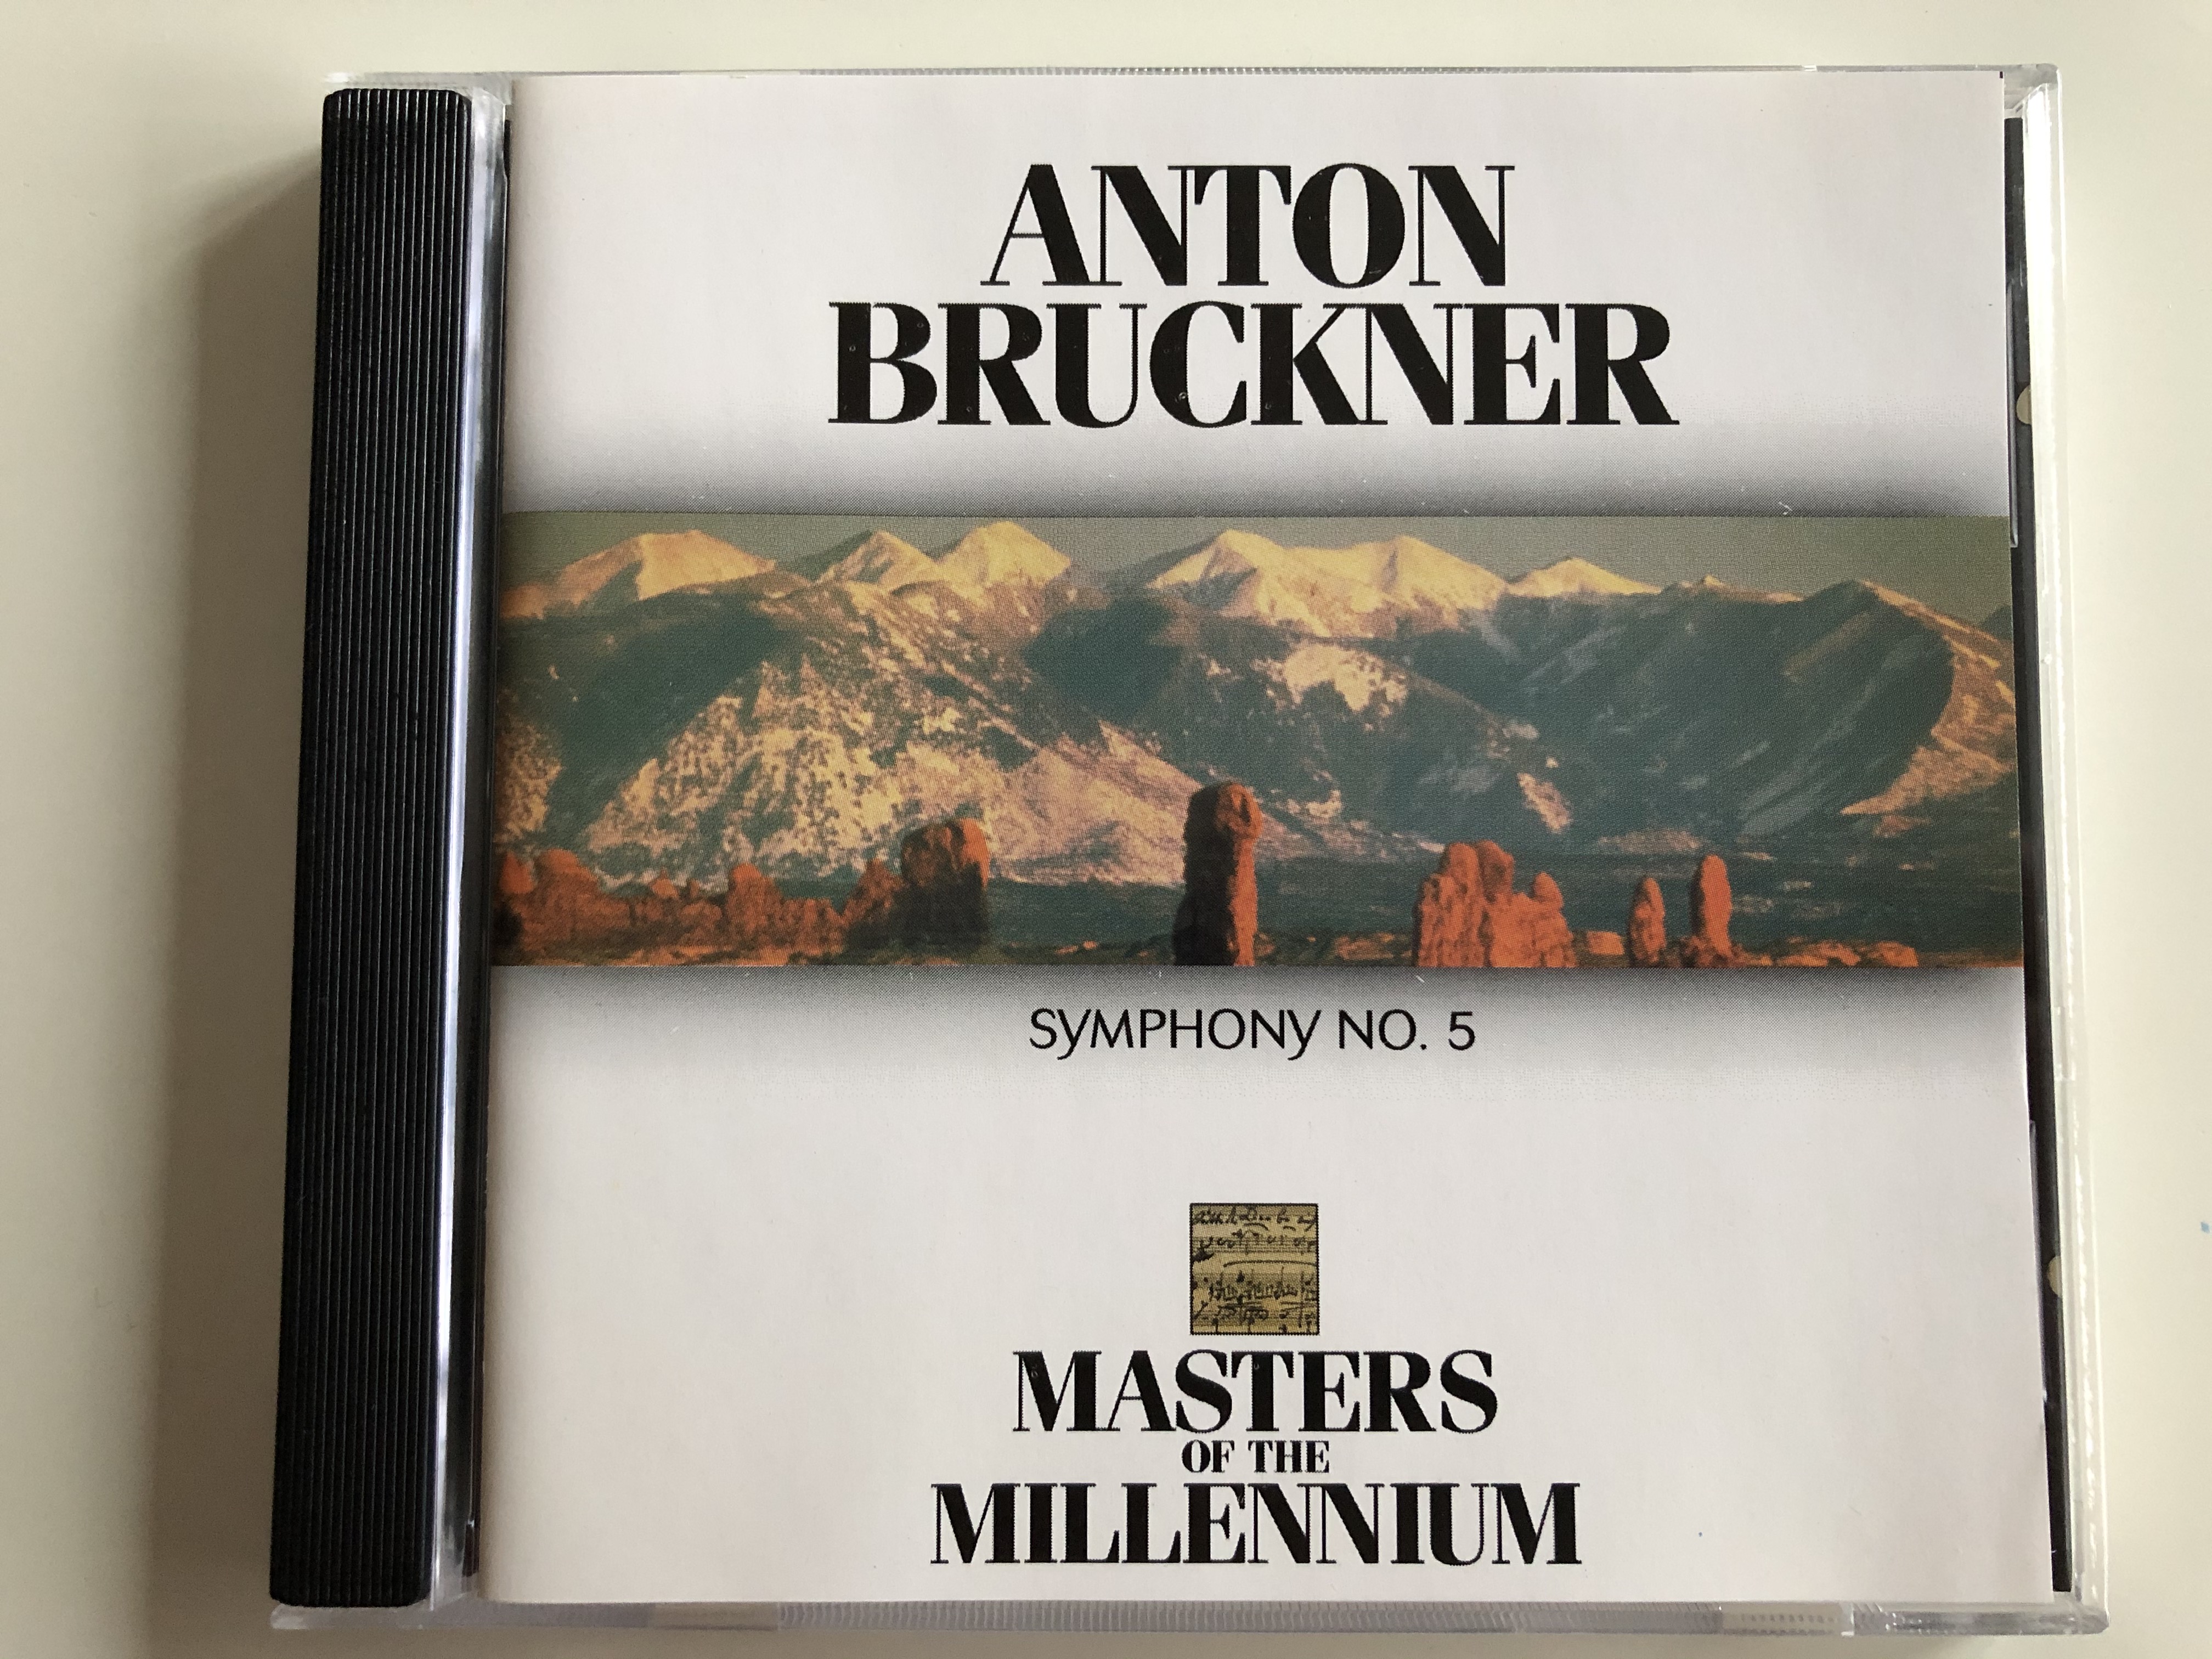 anton-bruckner-symphony-no.-5-masters-of-the-millennium-audio-cd-1999-mm-2077-1-.jpg